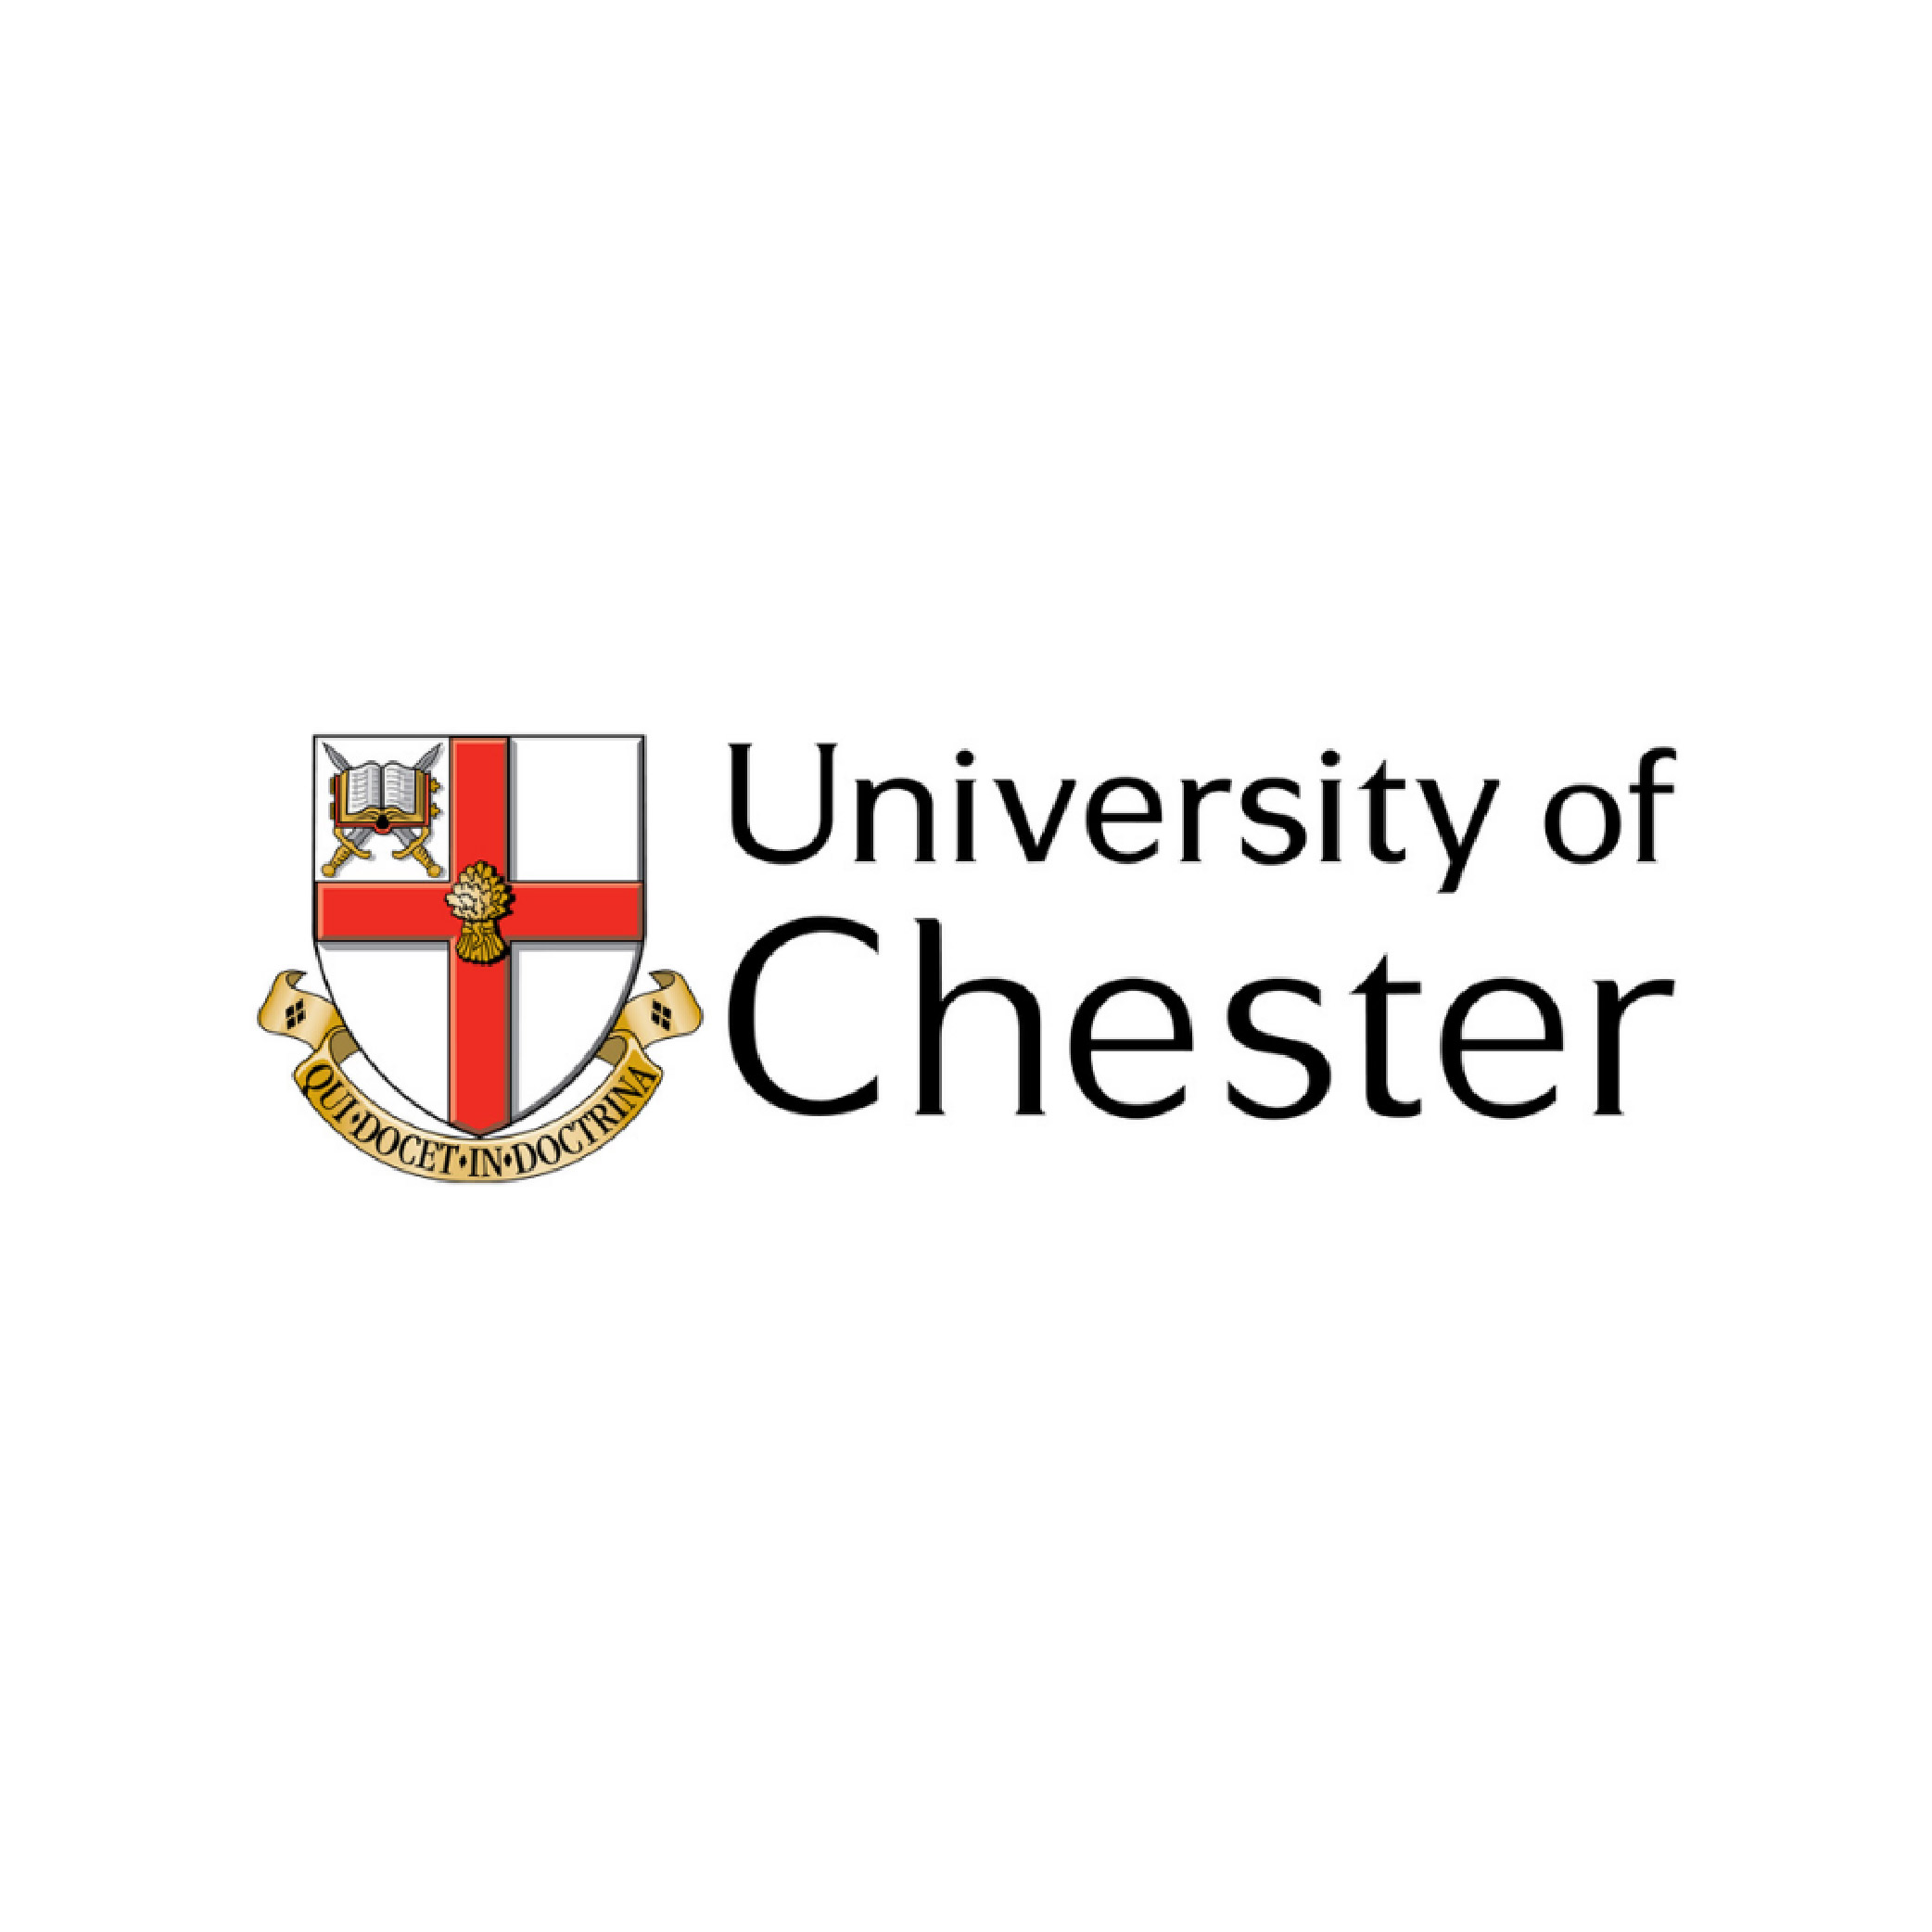 University of chester-01